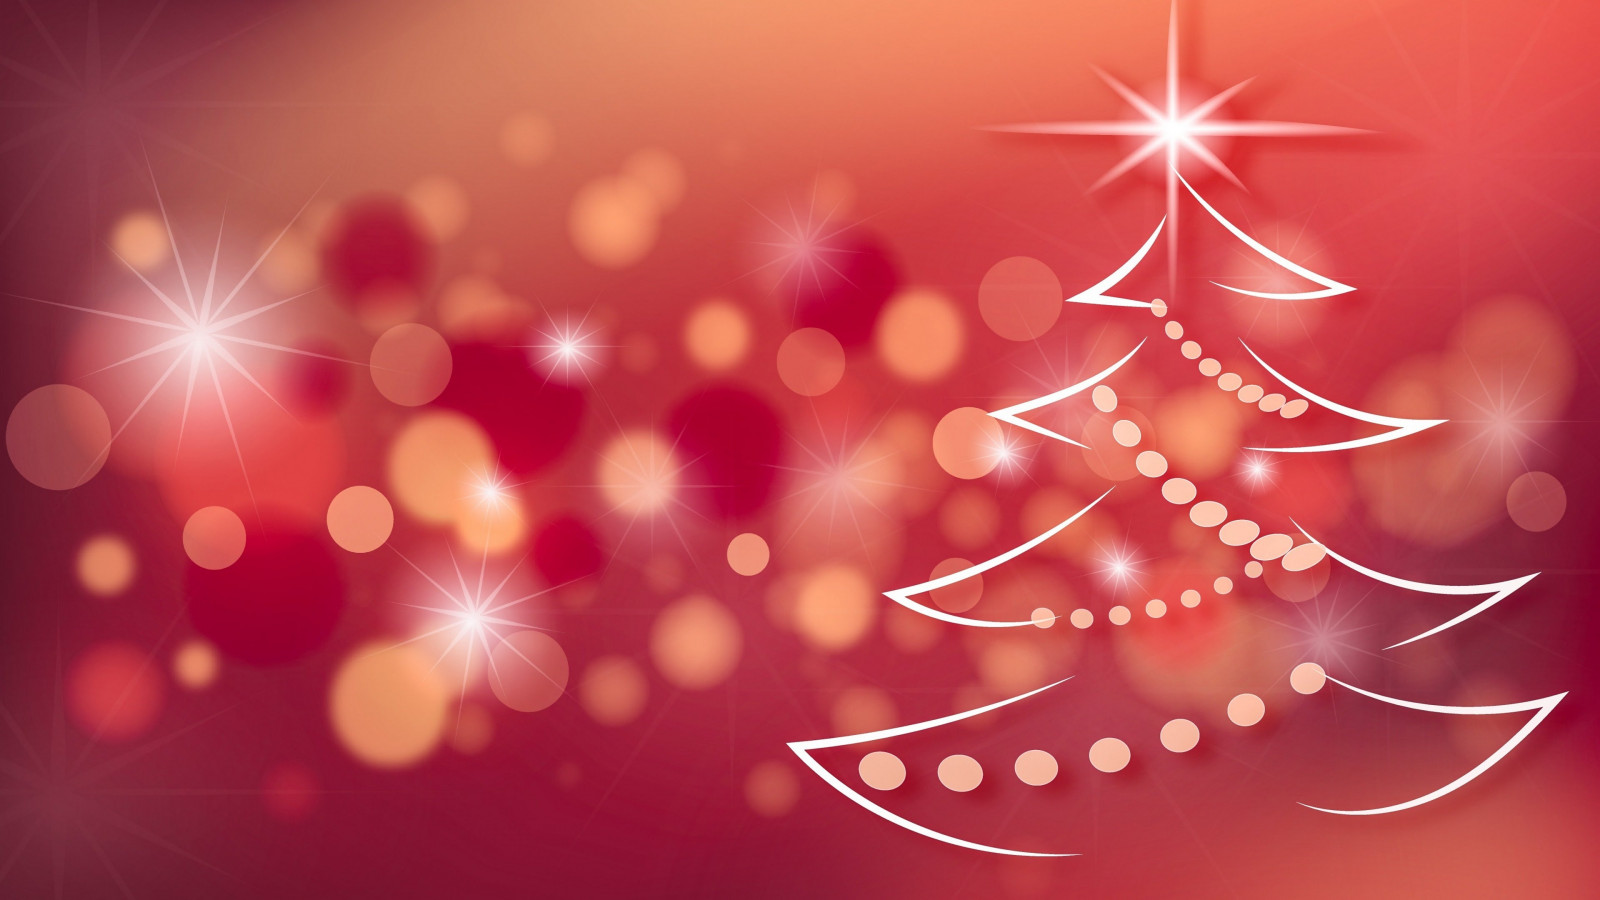 Download wallpaper: Christmas tree 1600x900